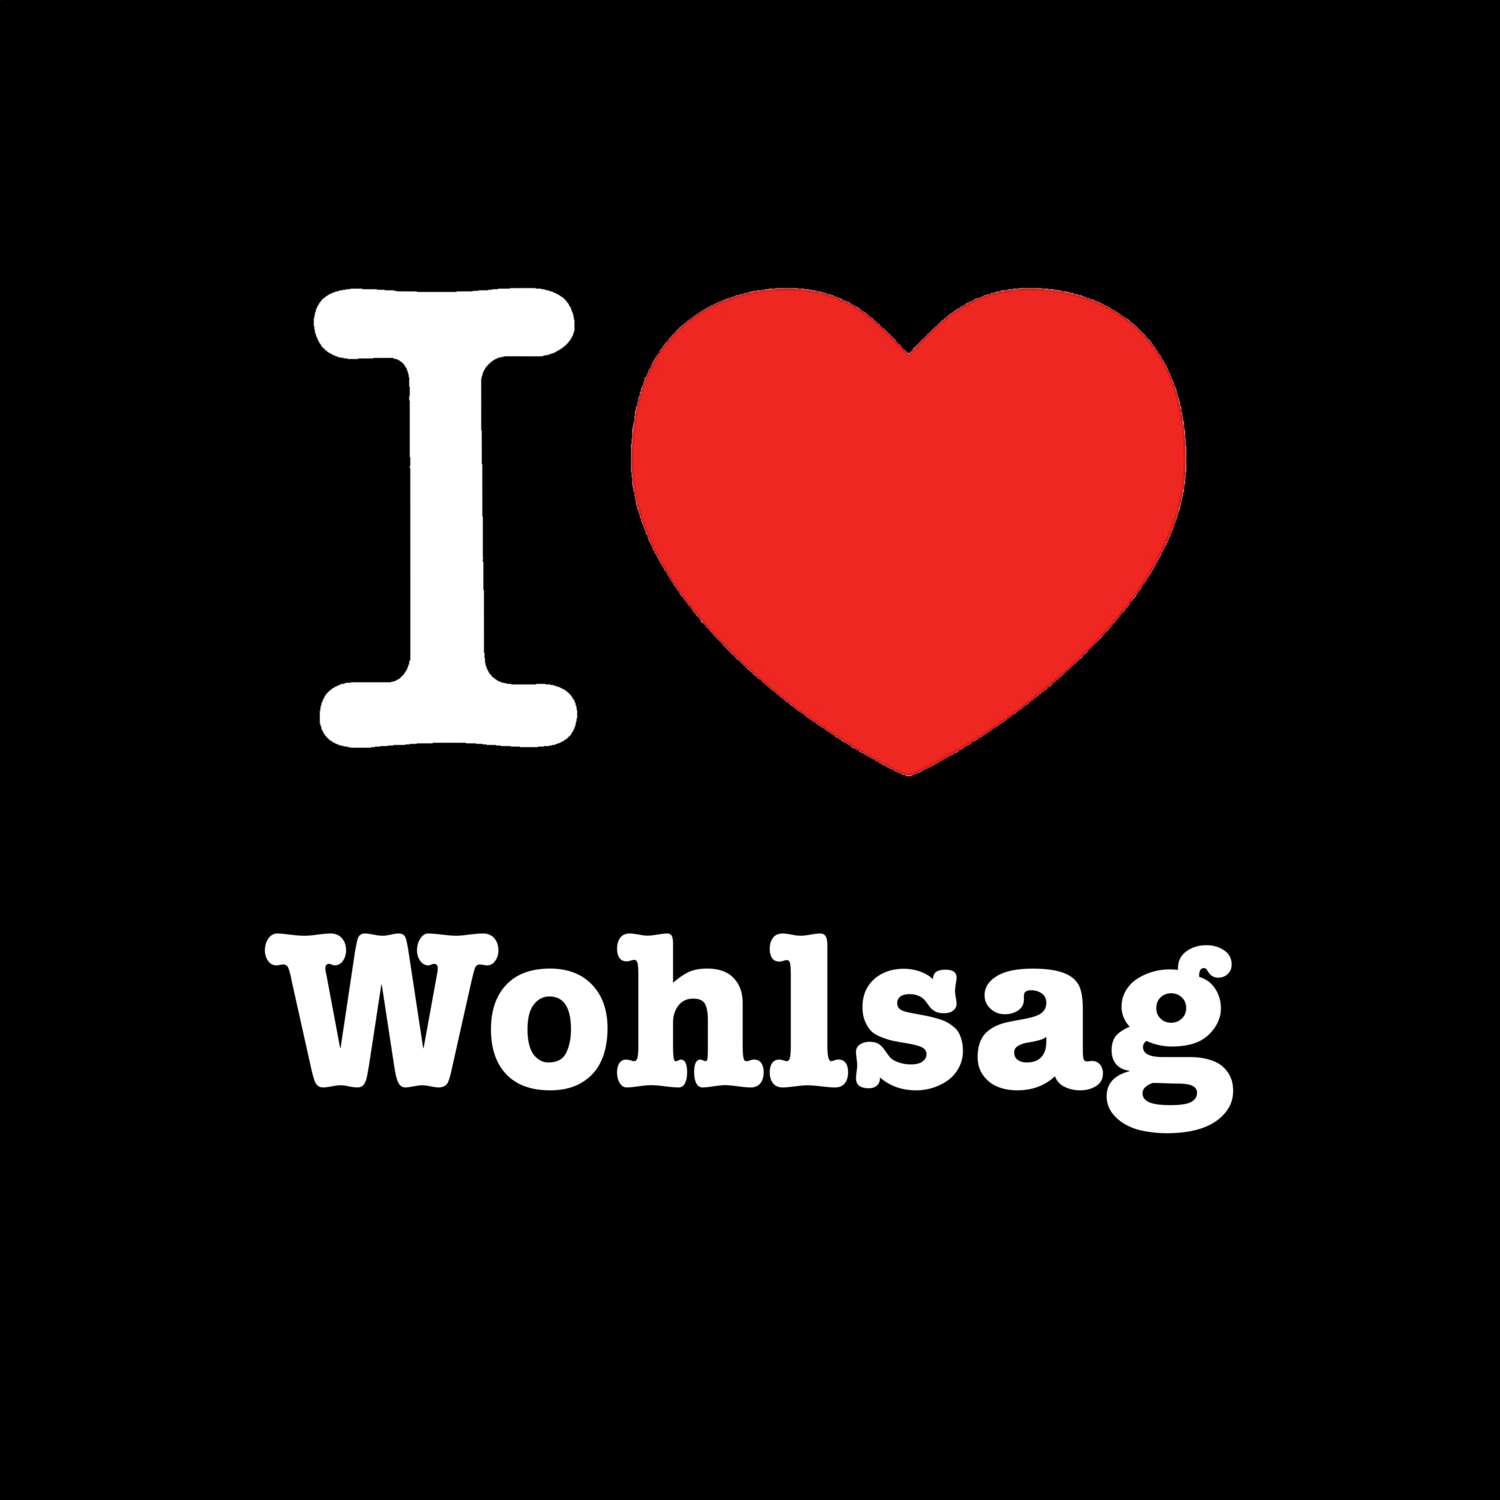 Wohlsag T-Shirt »I love«